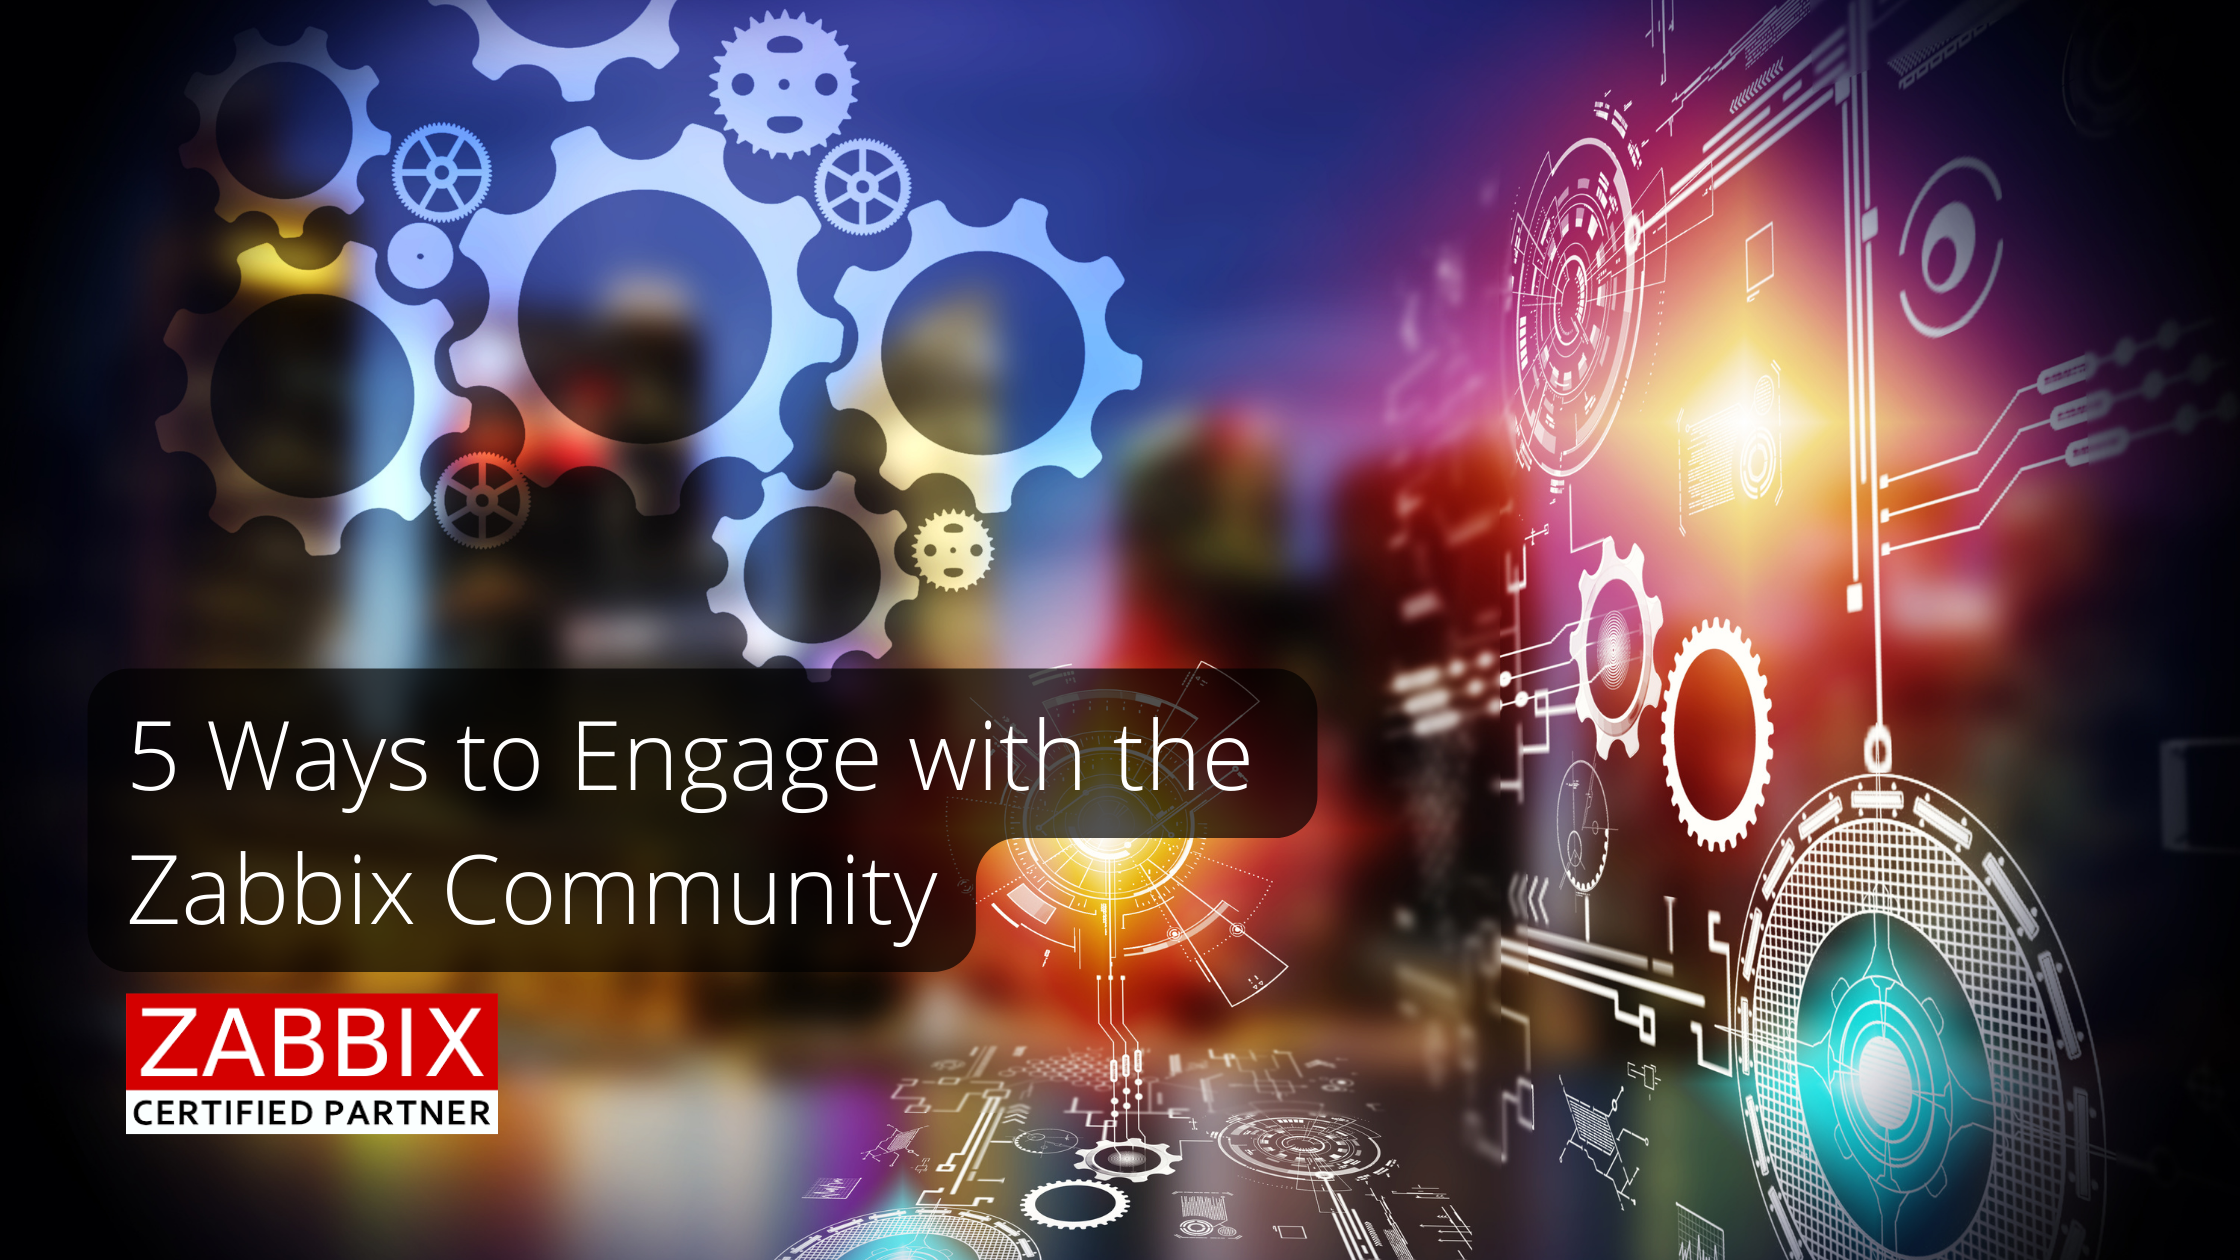 5 Ways to Engage with the Zabbix Community